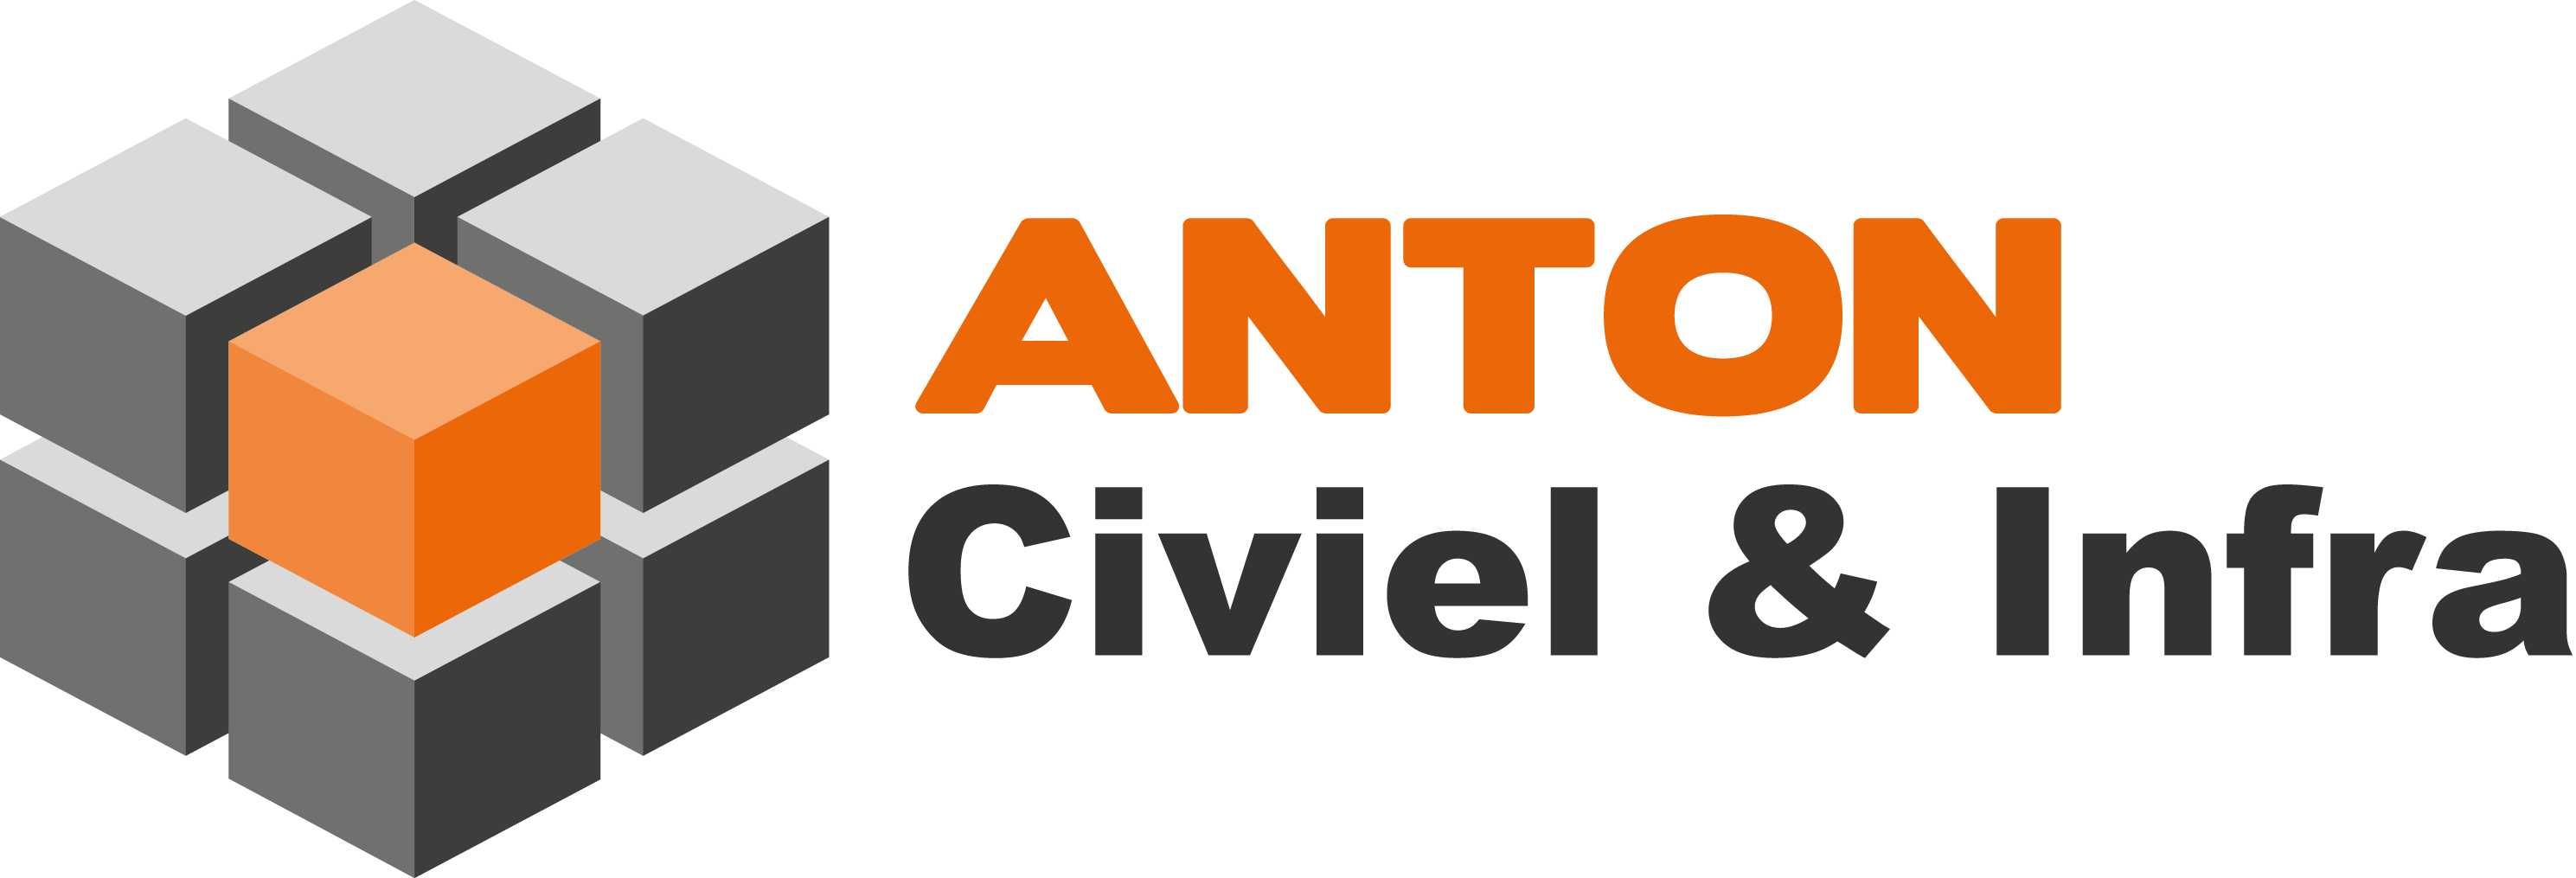 Anton Civiel & Infra